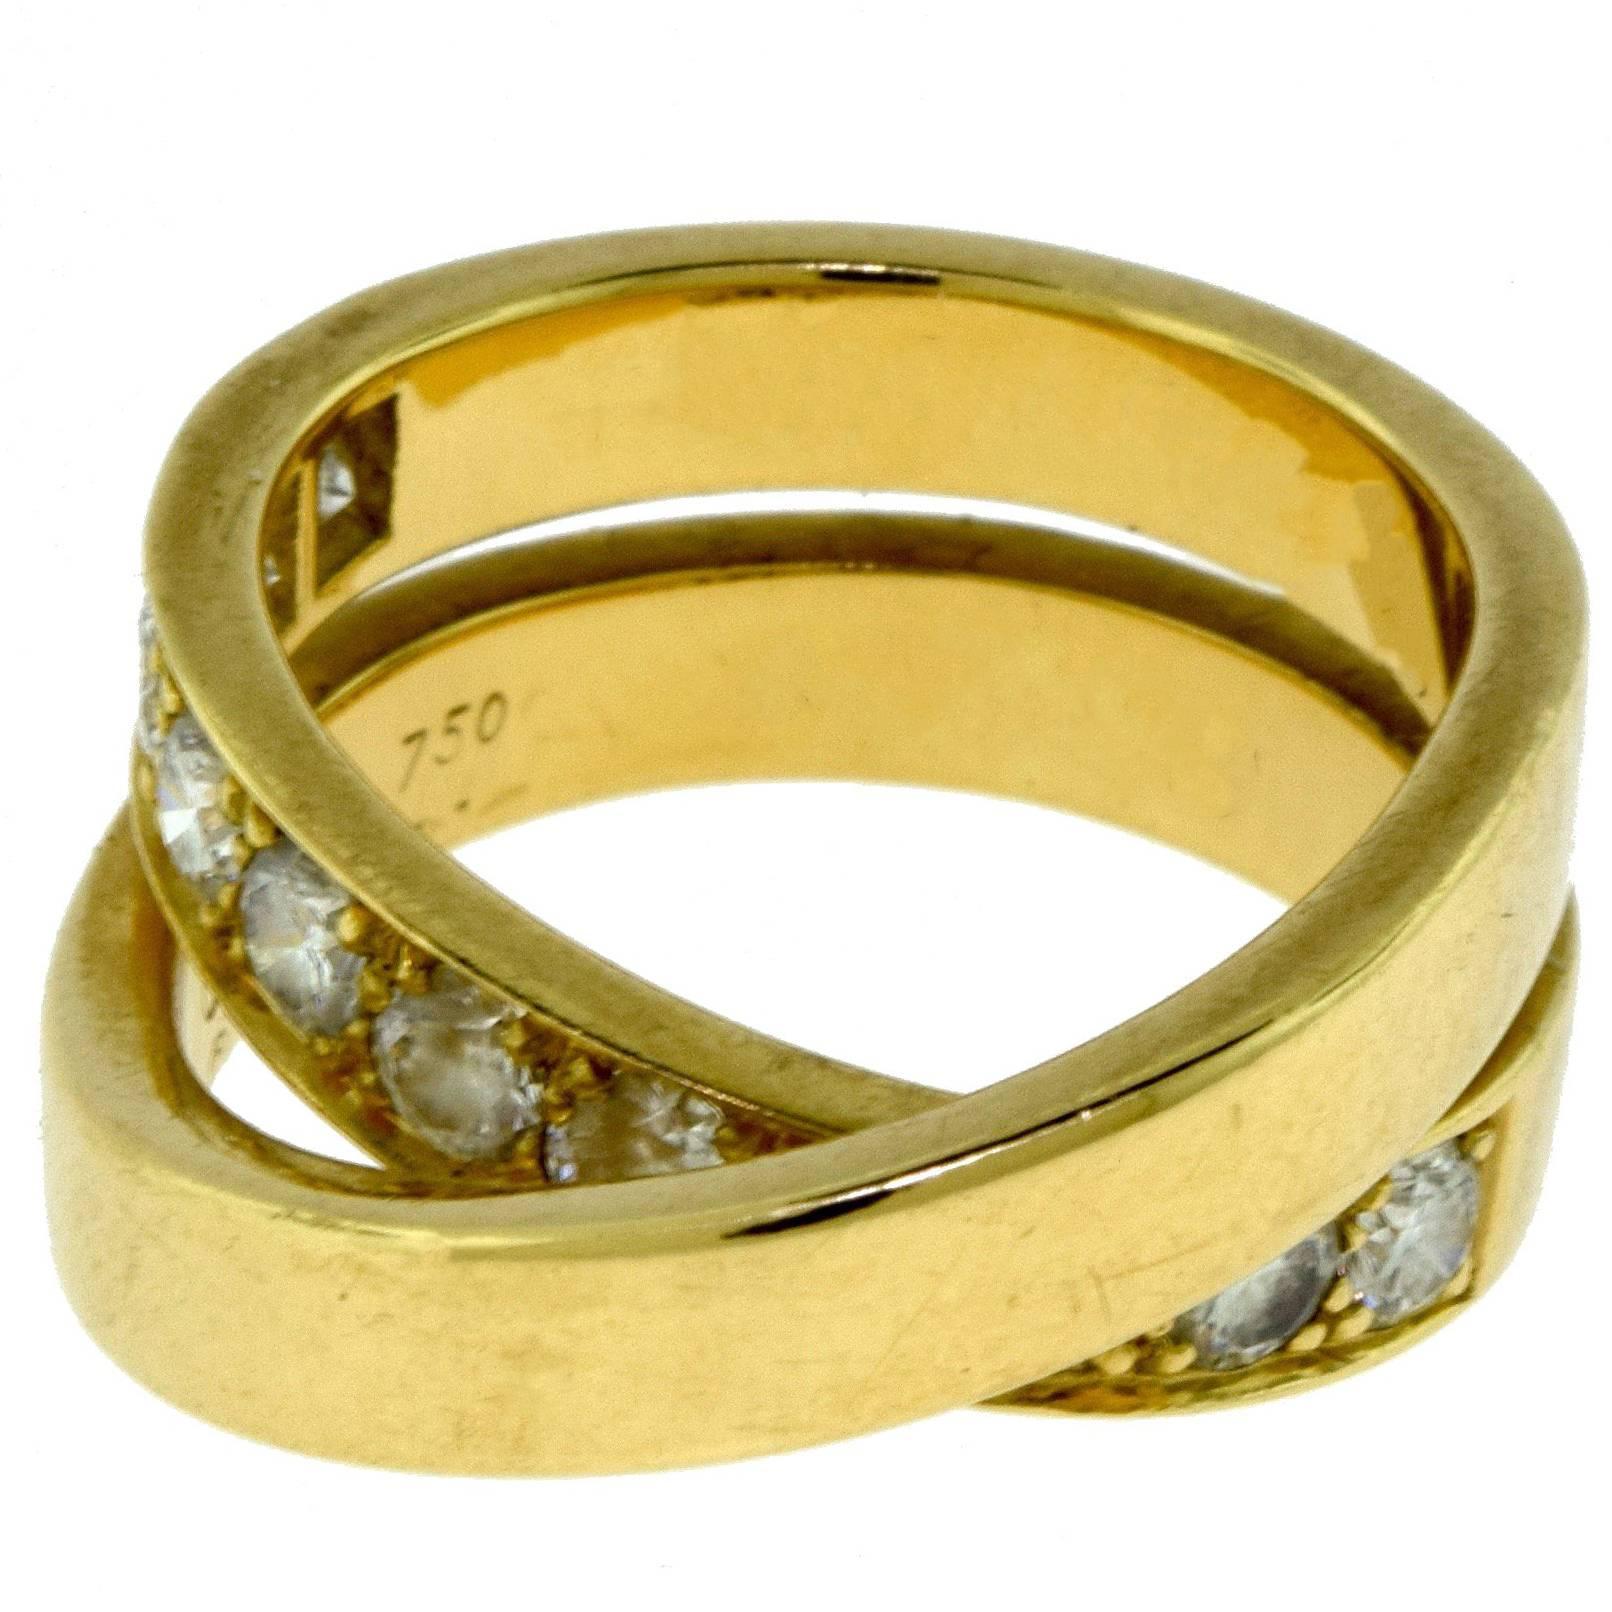 Cartier Paris Nouvelle Vague 18 Karat Yellow Gold Ring with Diamonds